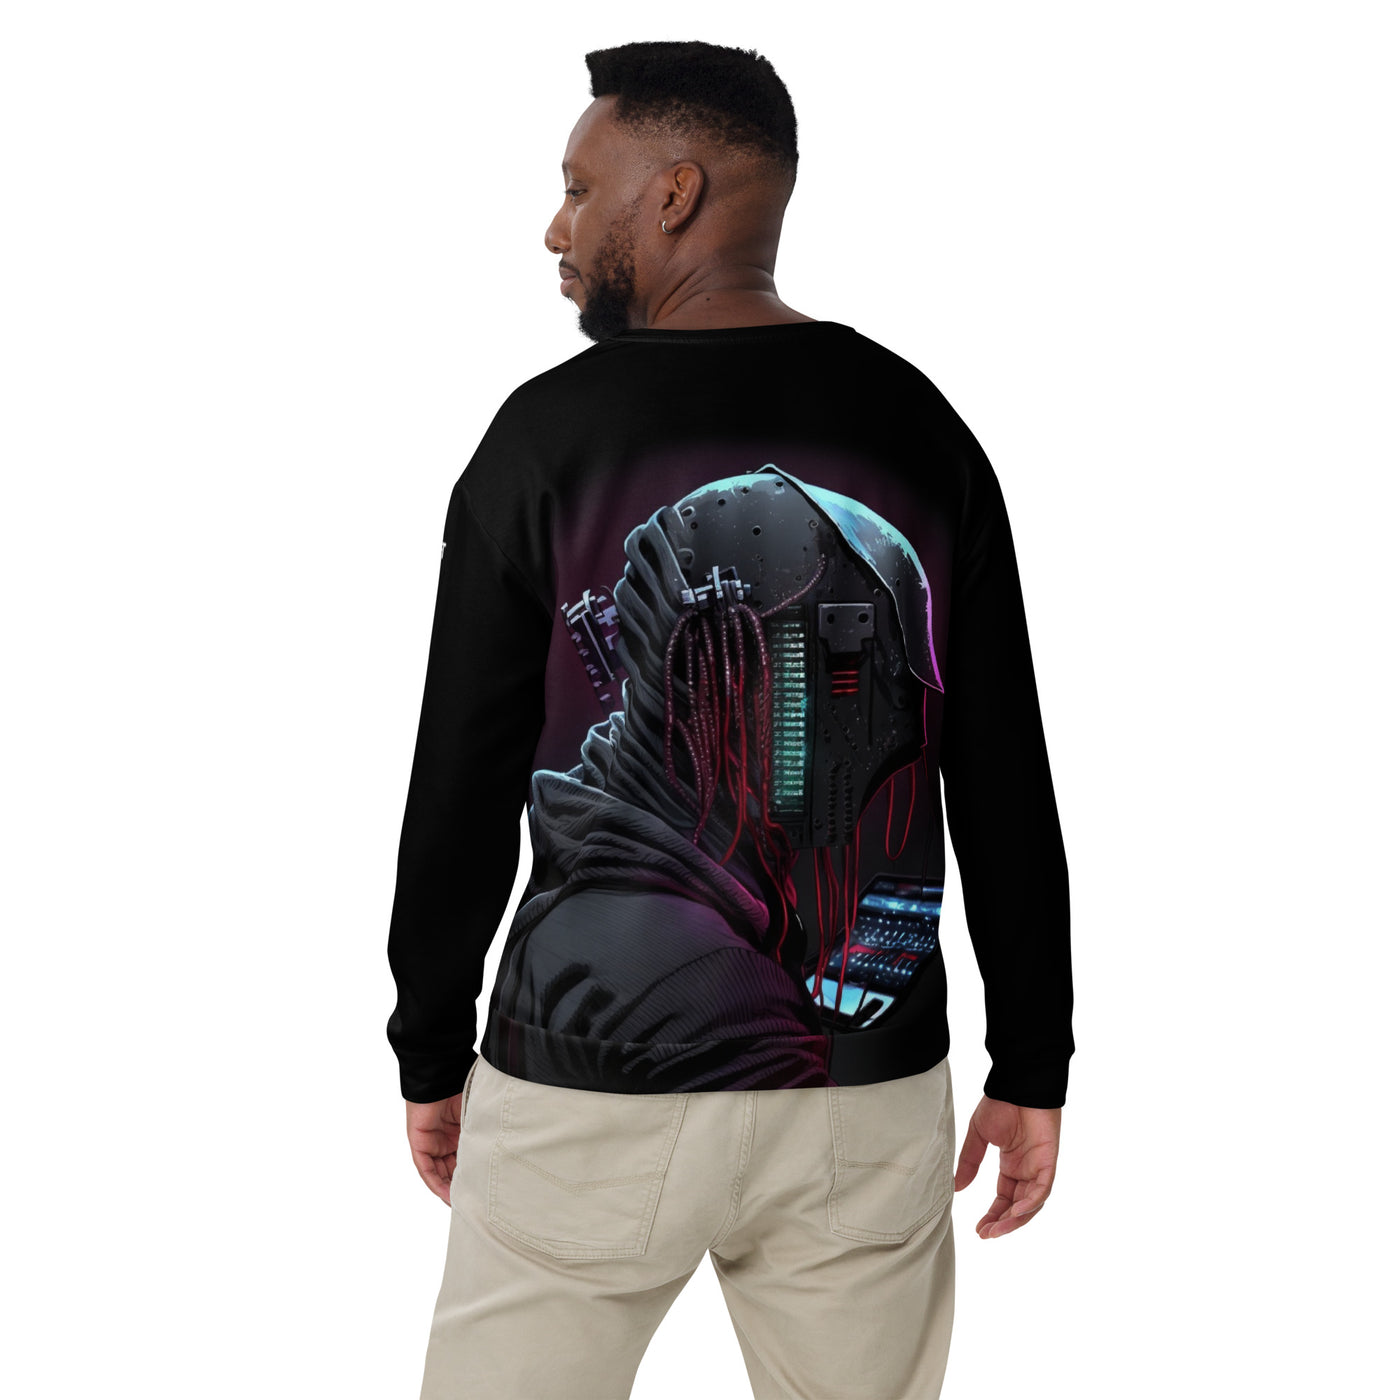 Cyberware assassin v4 - Unisex Sweatshirt ( Back Print )